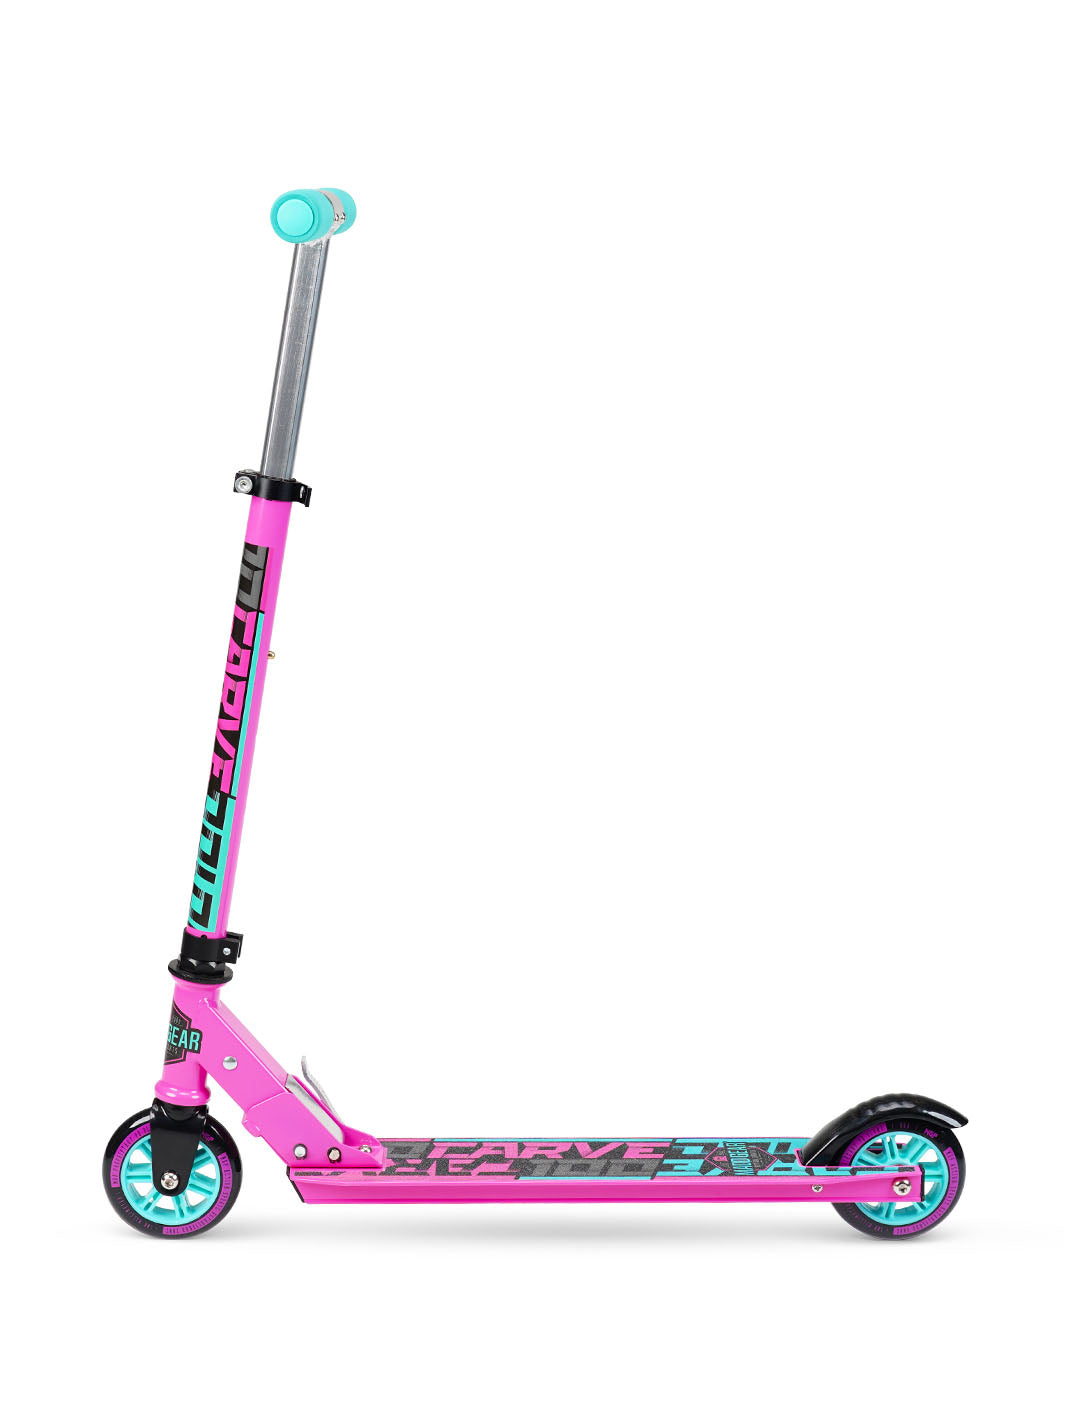 Madd Gear Kids Razor Kick Folding Scooter Pink Teal Boys Girls Adjustable Compact Fun